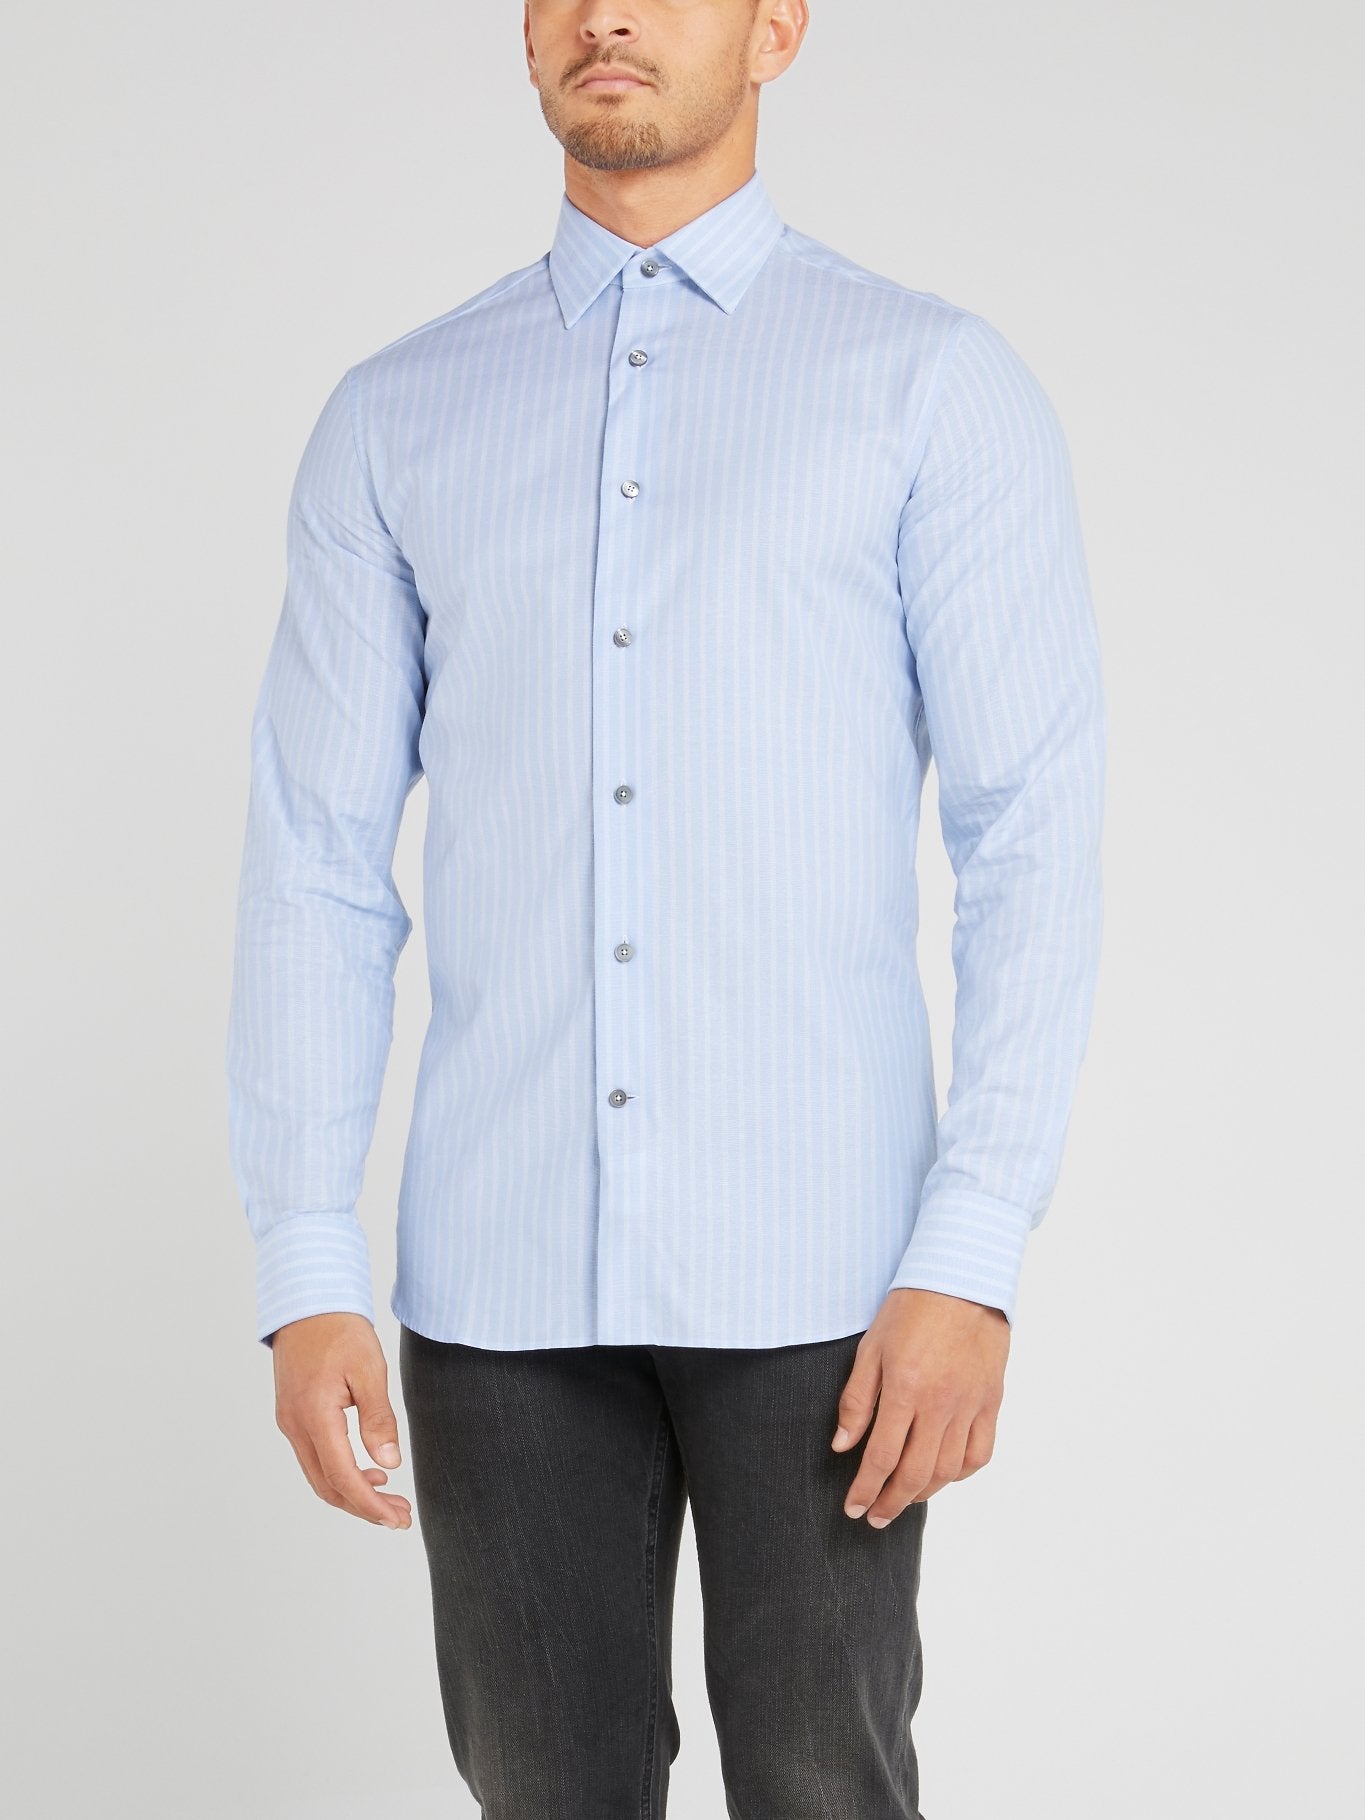 Light Blue Striped Long Sleeve Shirt